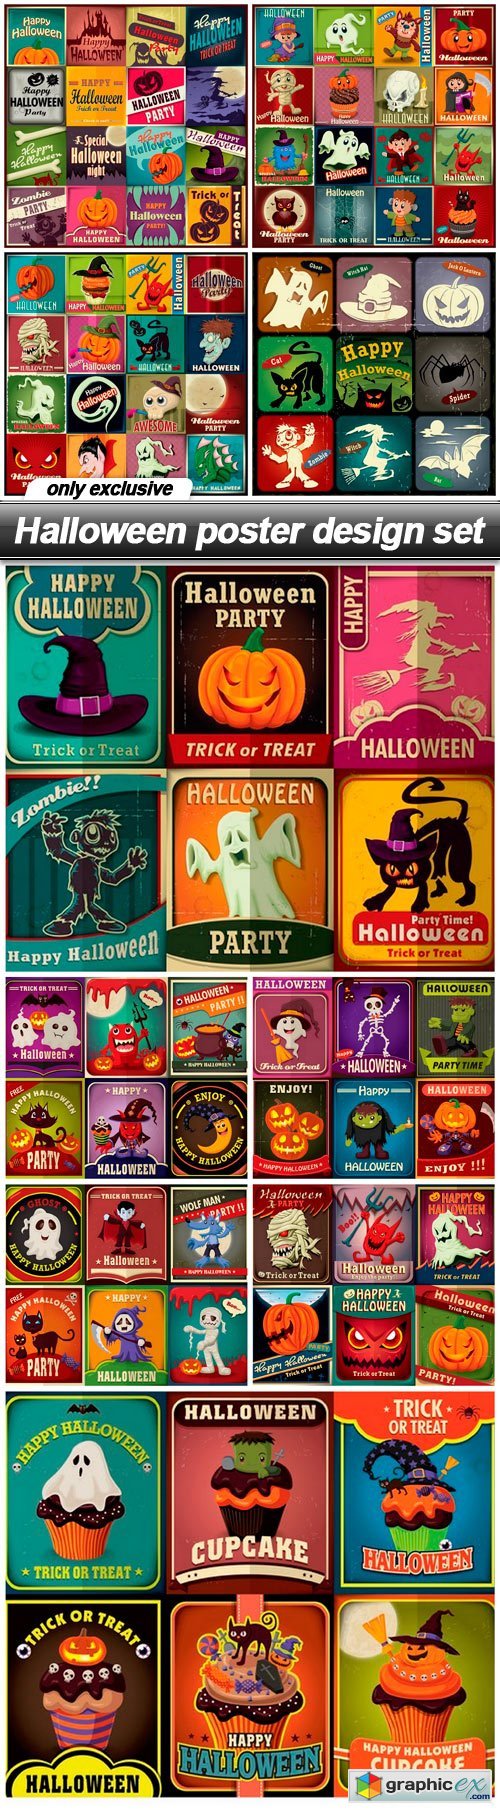 Halloween poster design set - 10 EPS